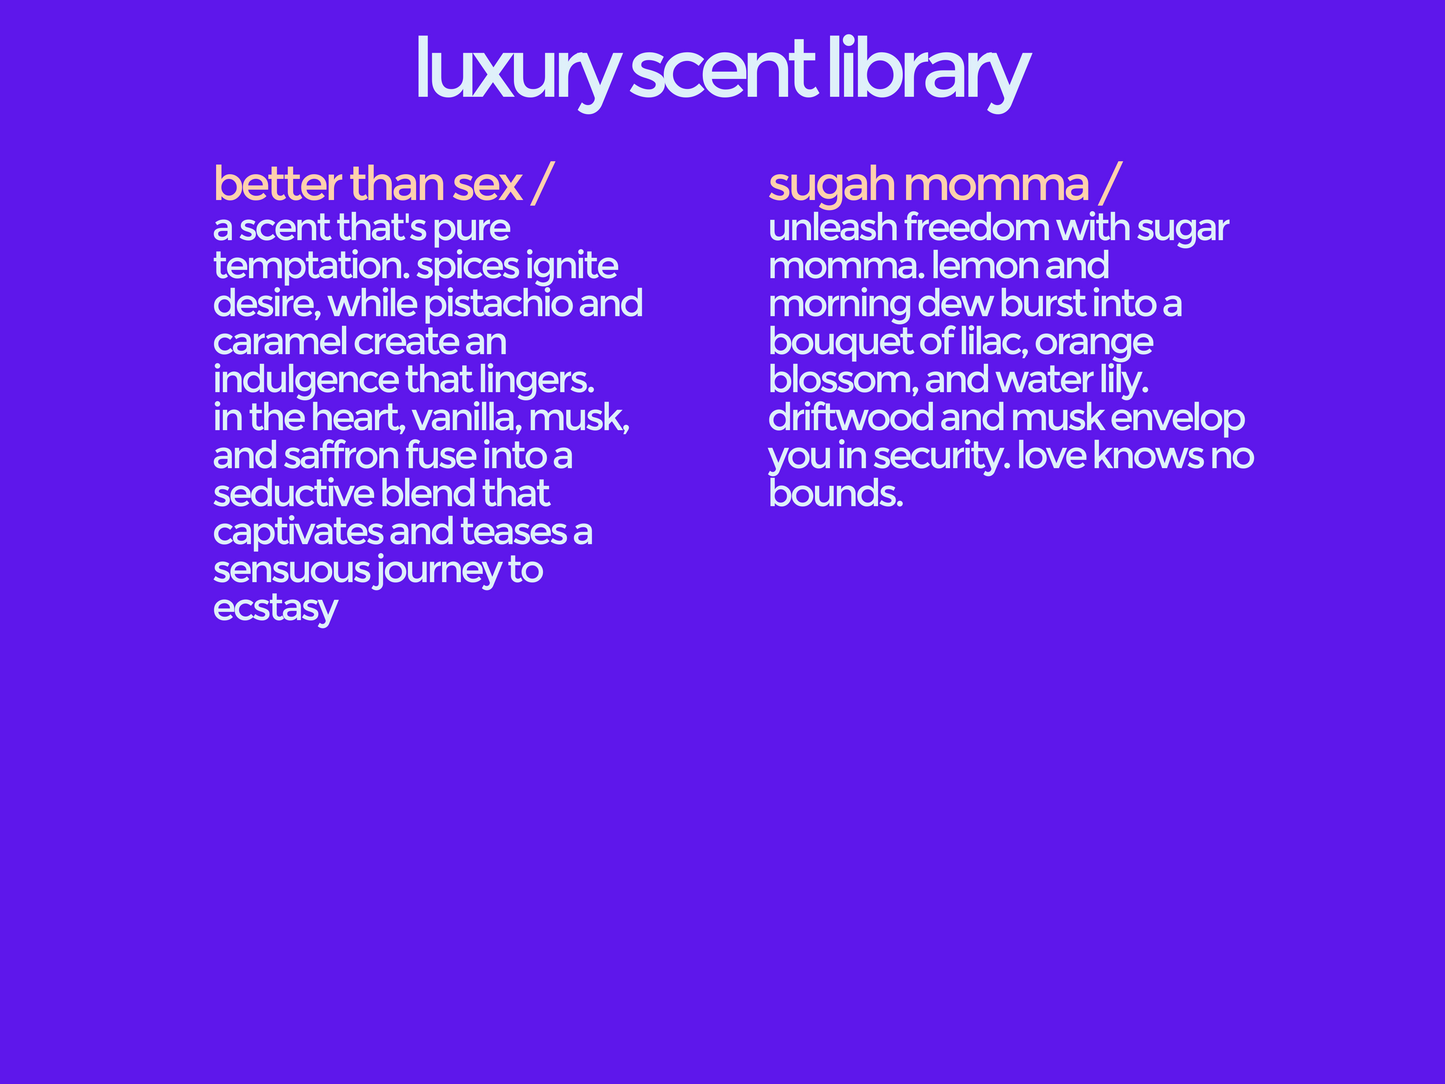 better than sex [luxury]